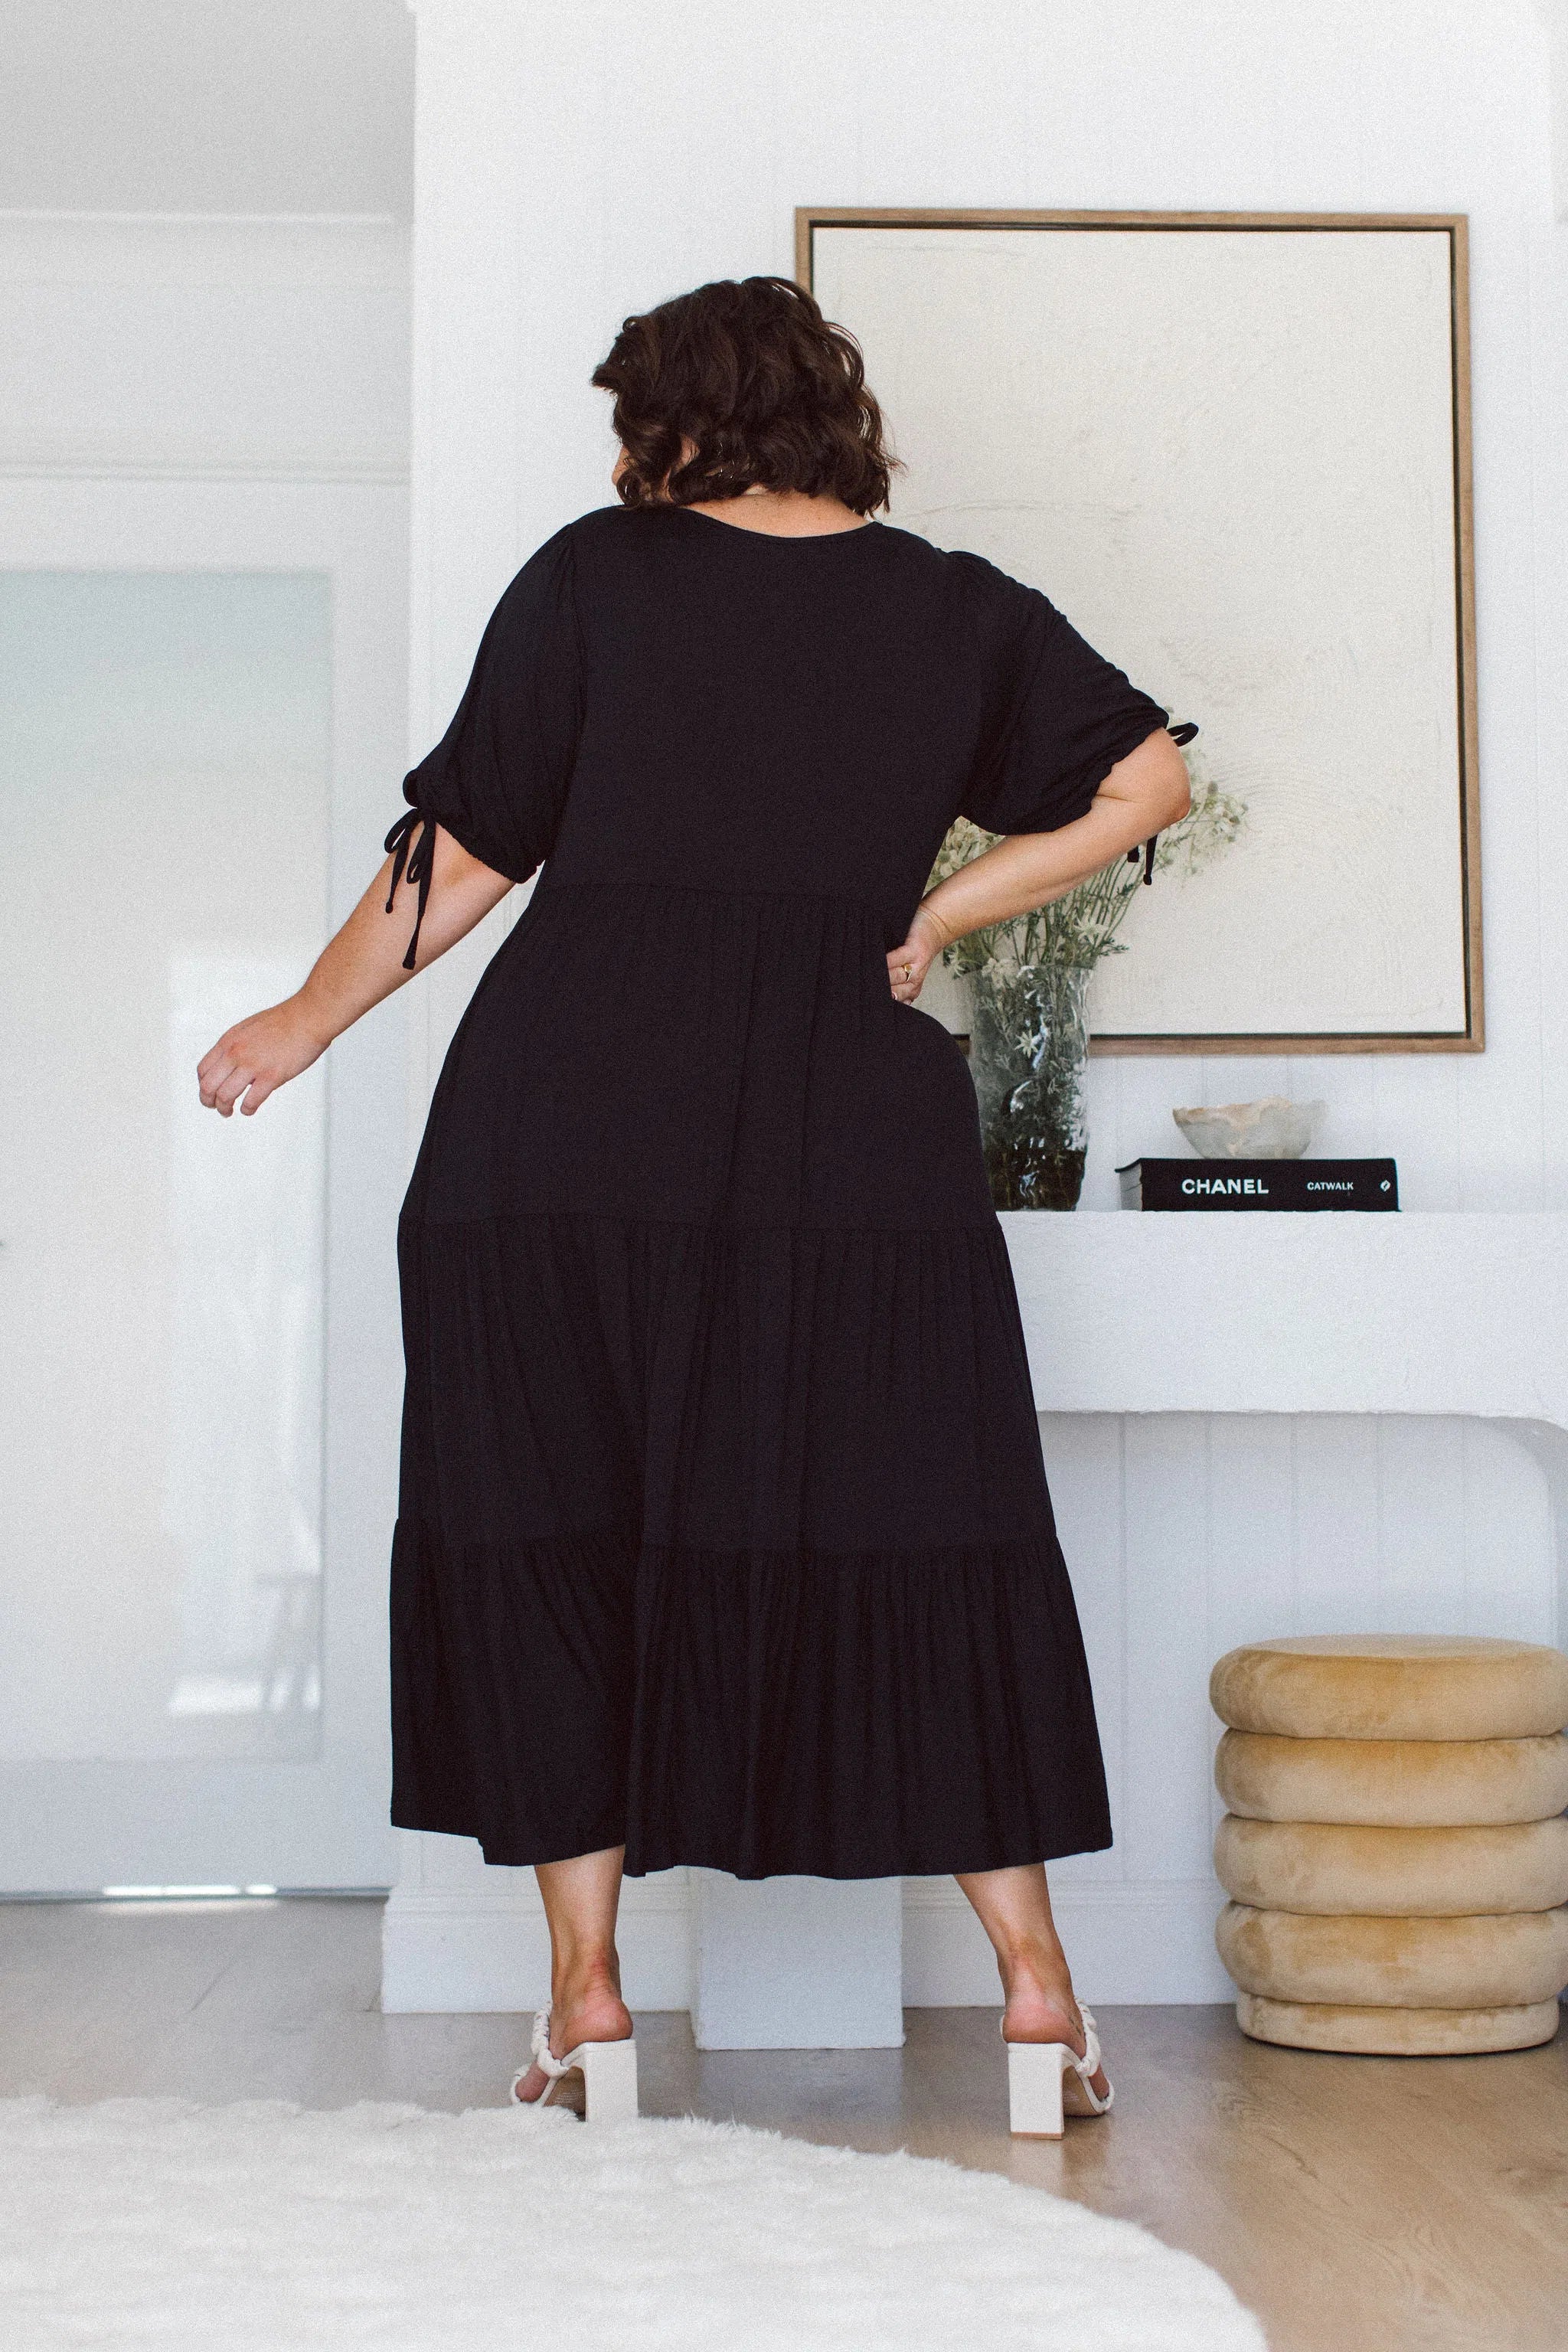 Peach The Label Designer Plus Size Dress - Harlow Dress in Black for Curvy Women